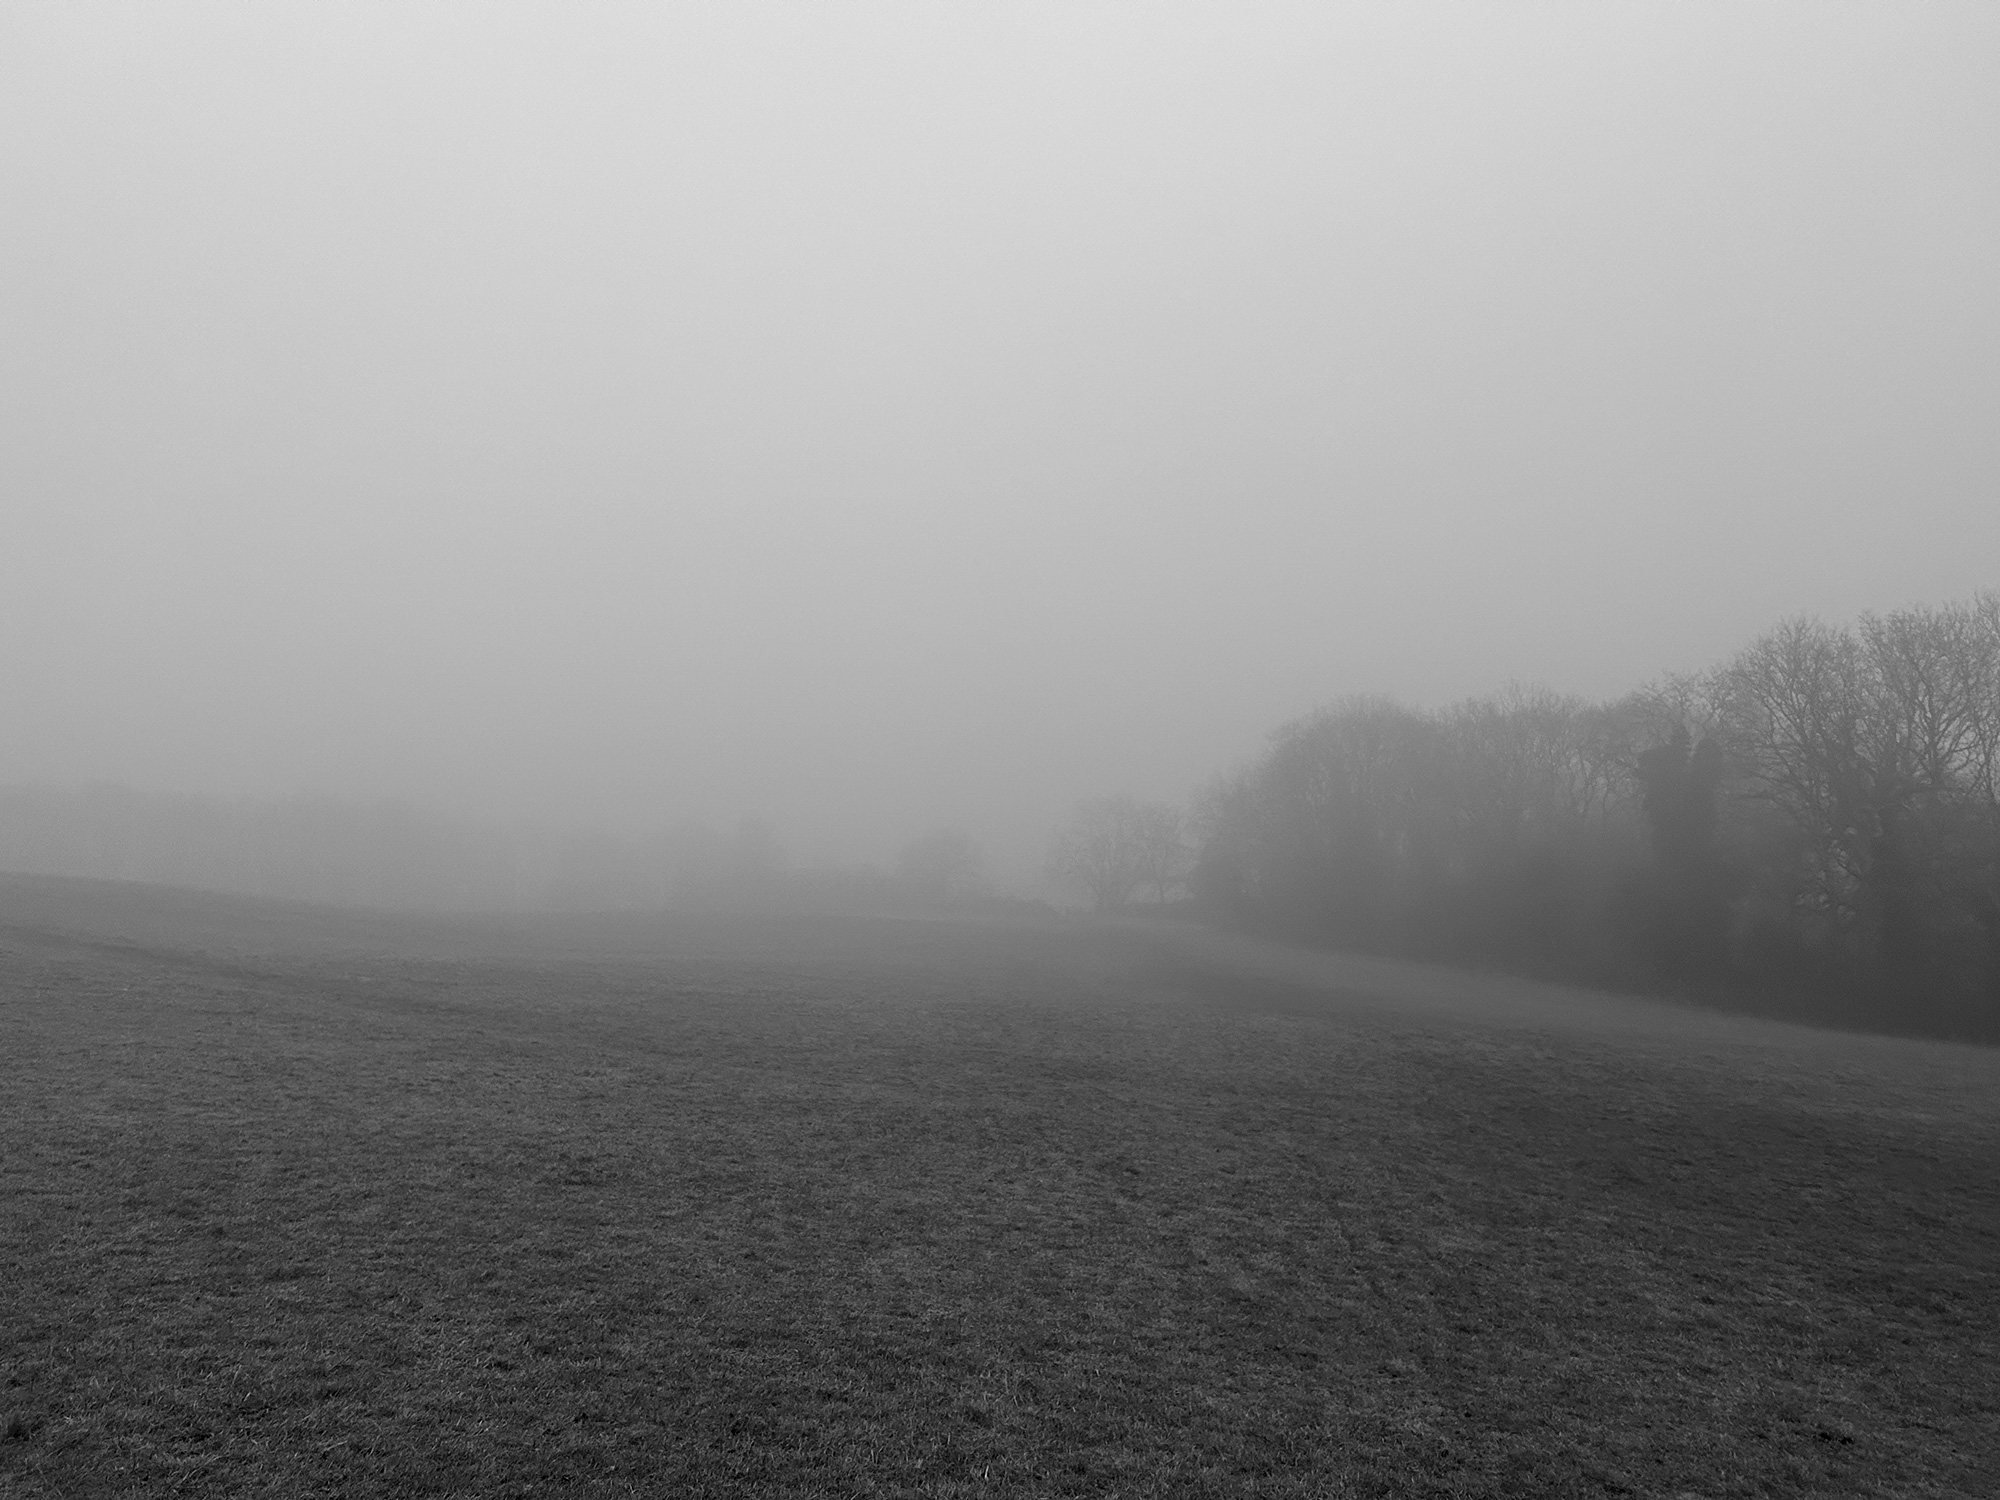 Up through the mist'